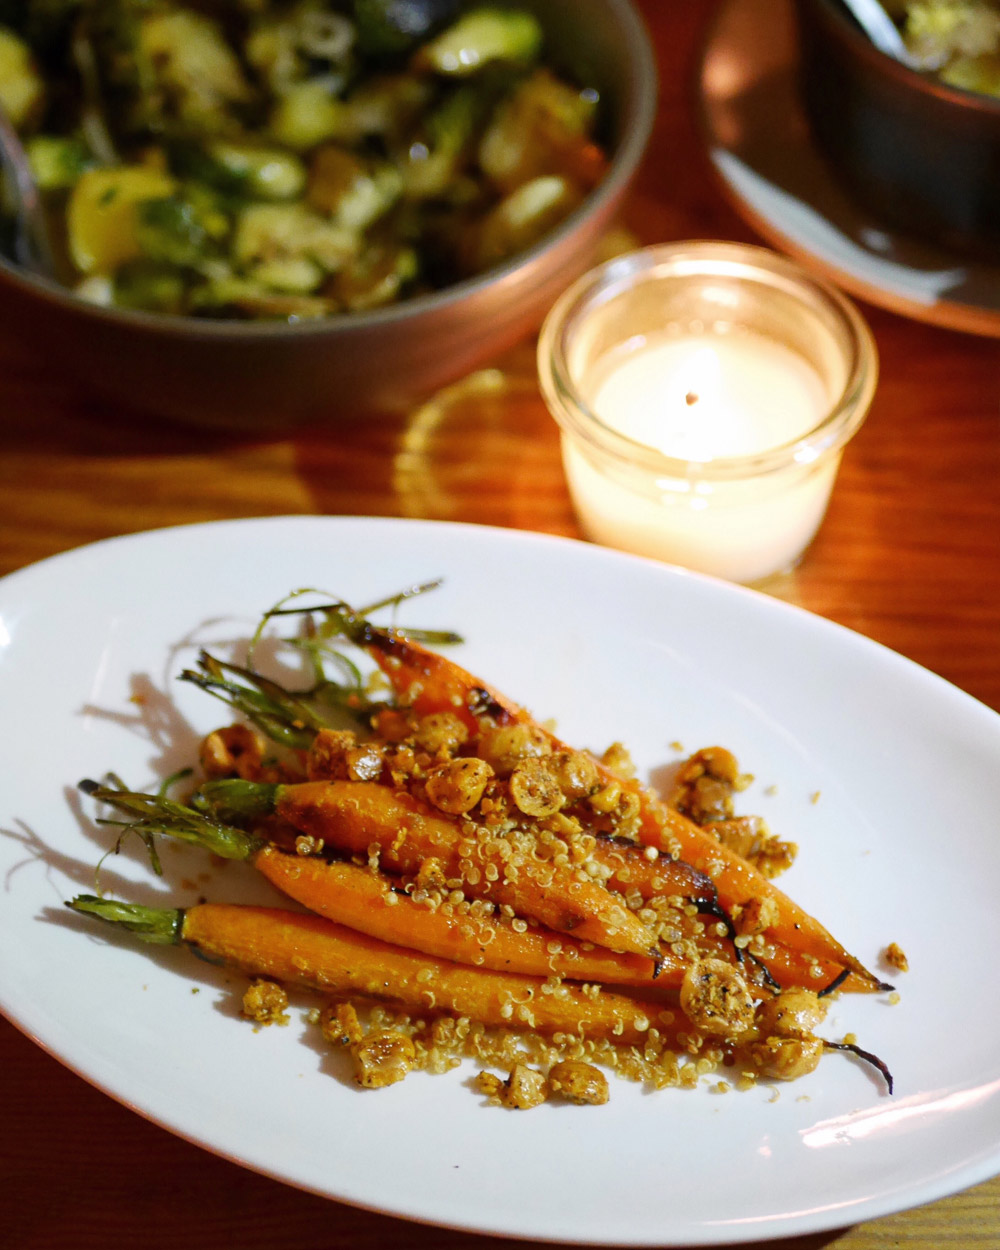 Carrots with Crunchy Quinoa, Urban Farmer, Downtown Portland